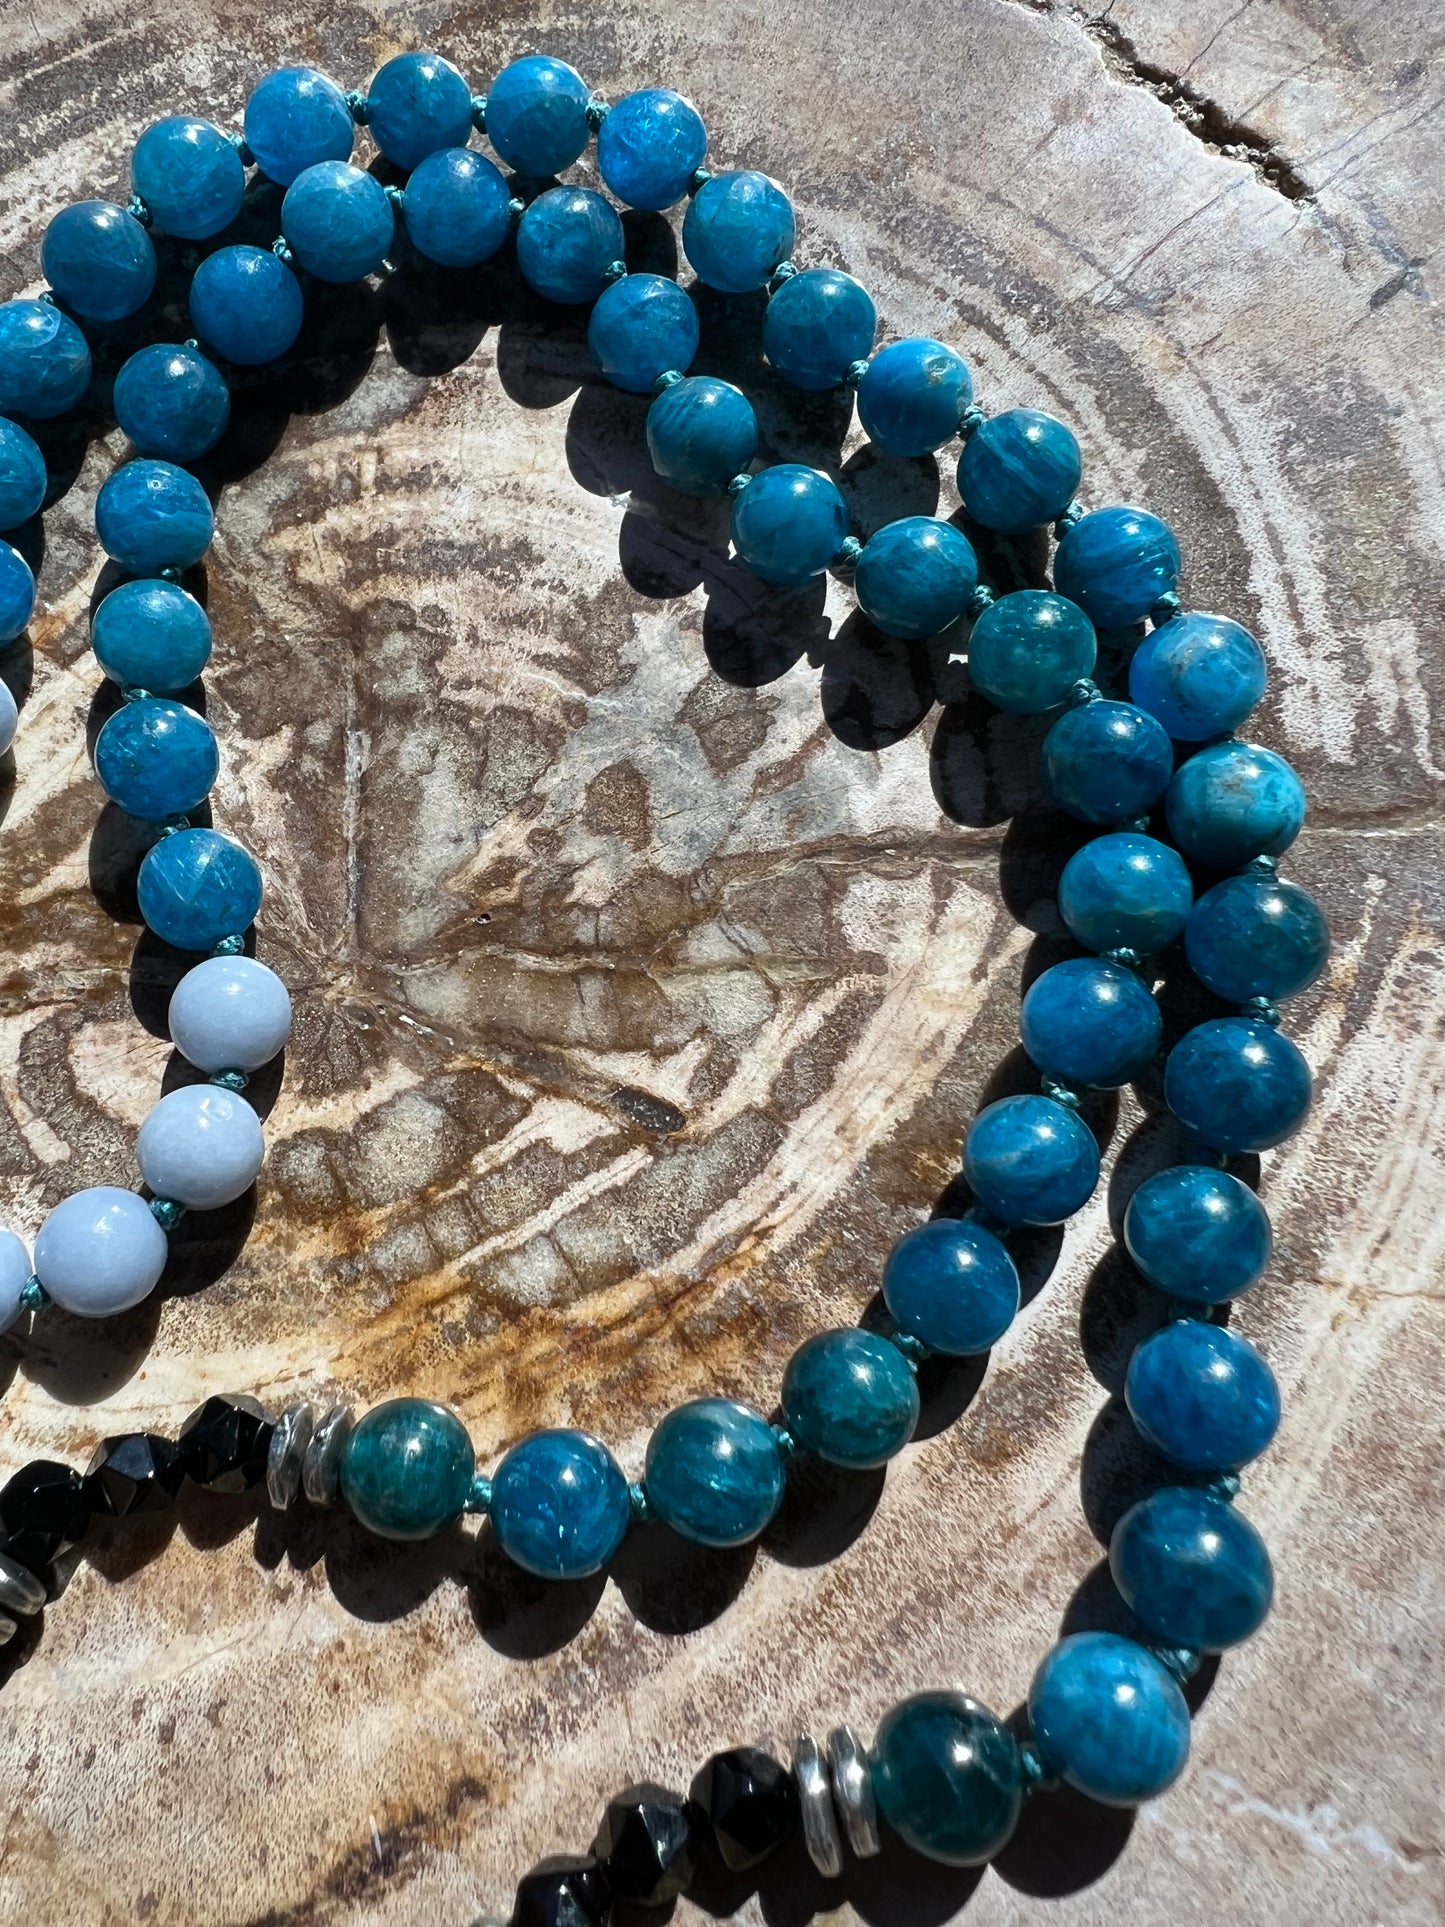 Mālā Half with Apatite, Angelite Beads and a Apatite Guru Bead/Pendant